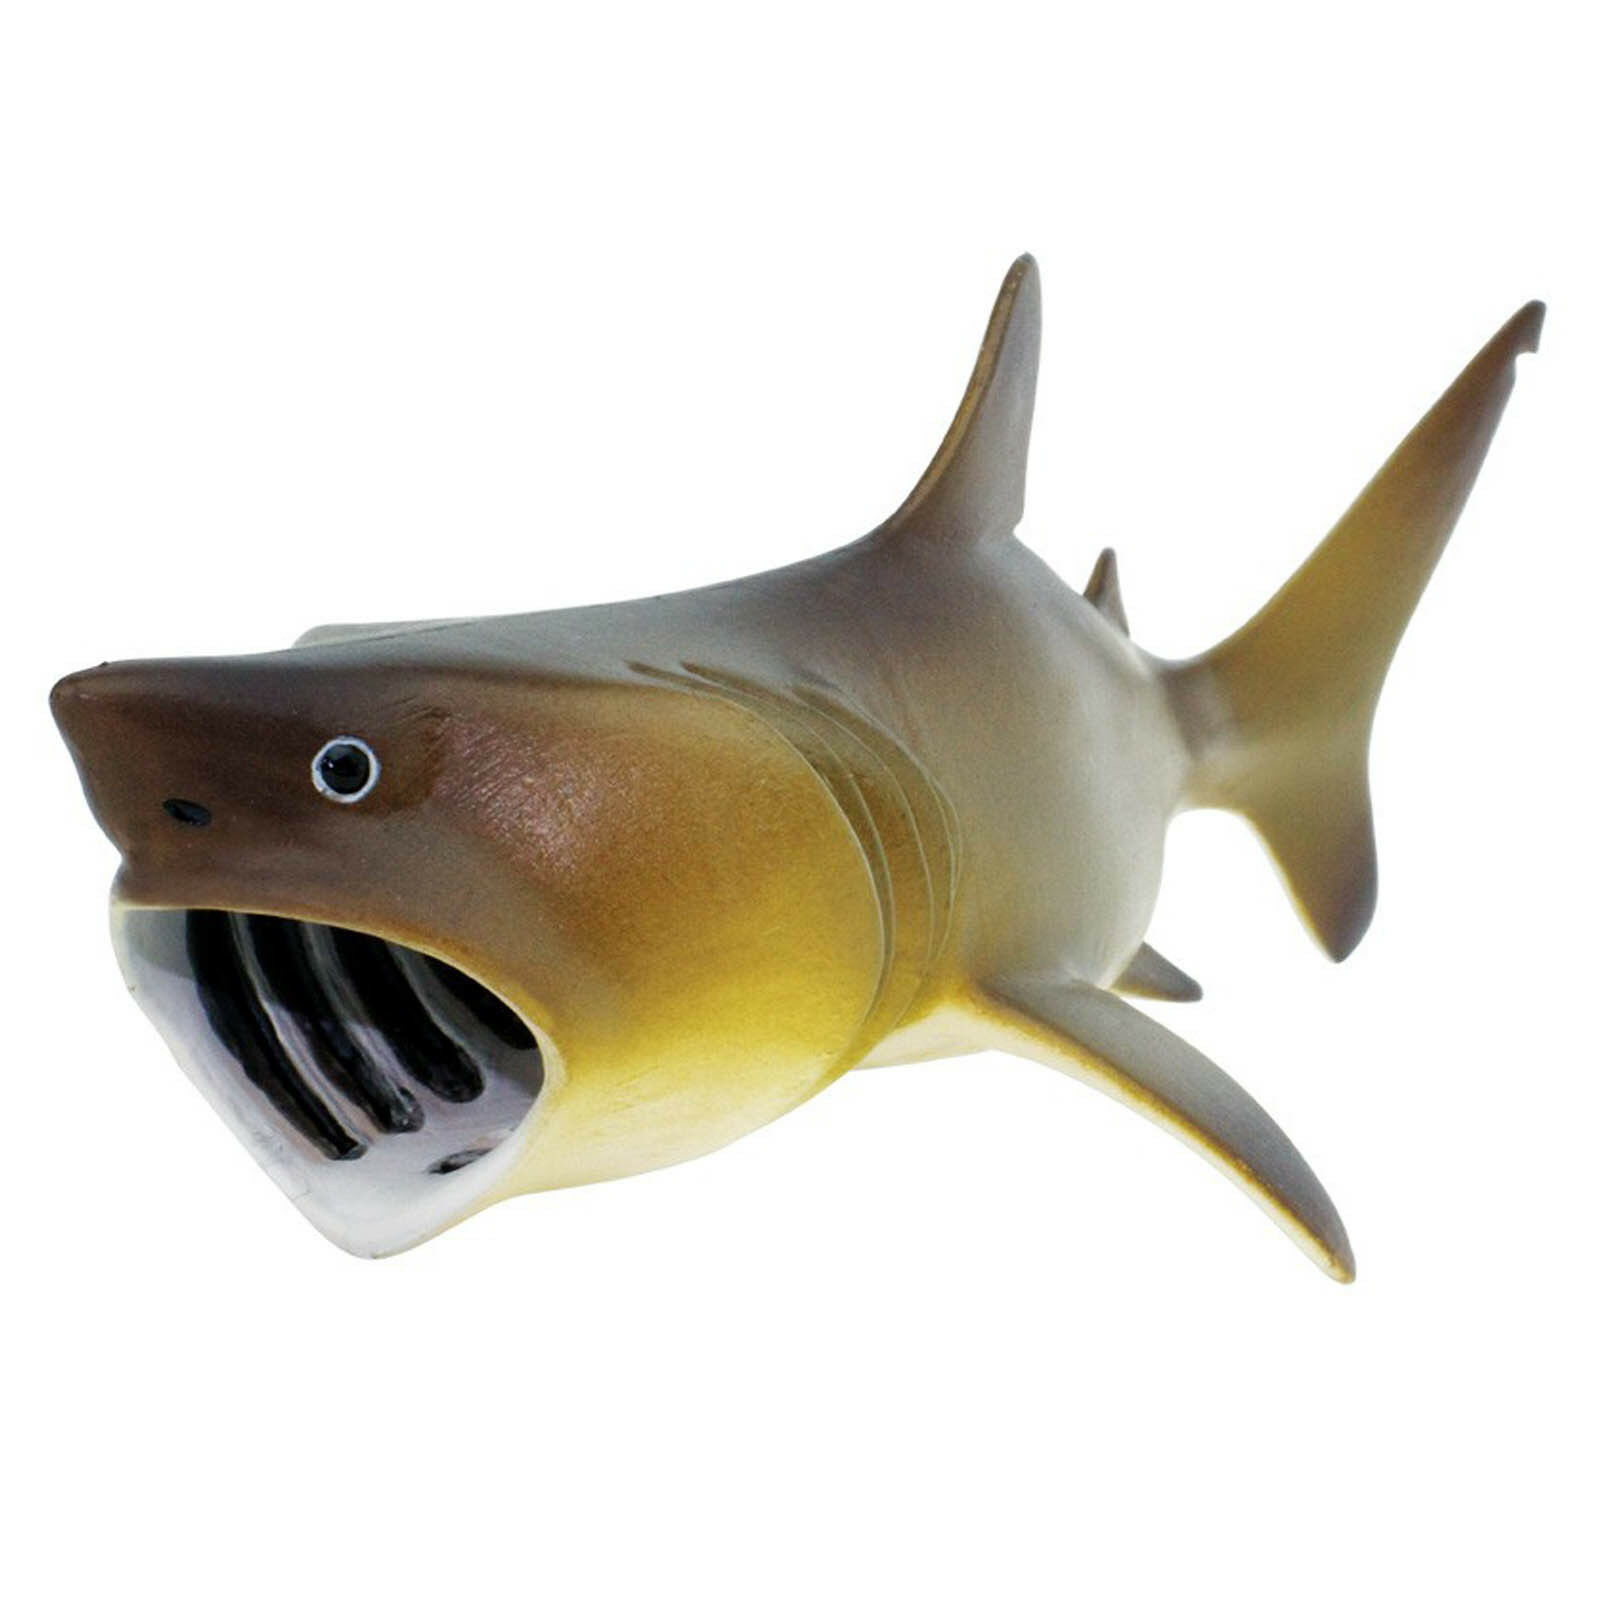 Basking Shark Sea Life Safari Ltd New Toys Educational Figurine Kids Adults